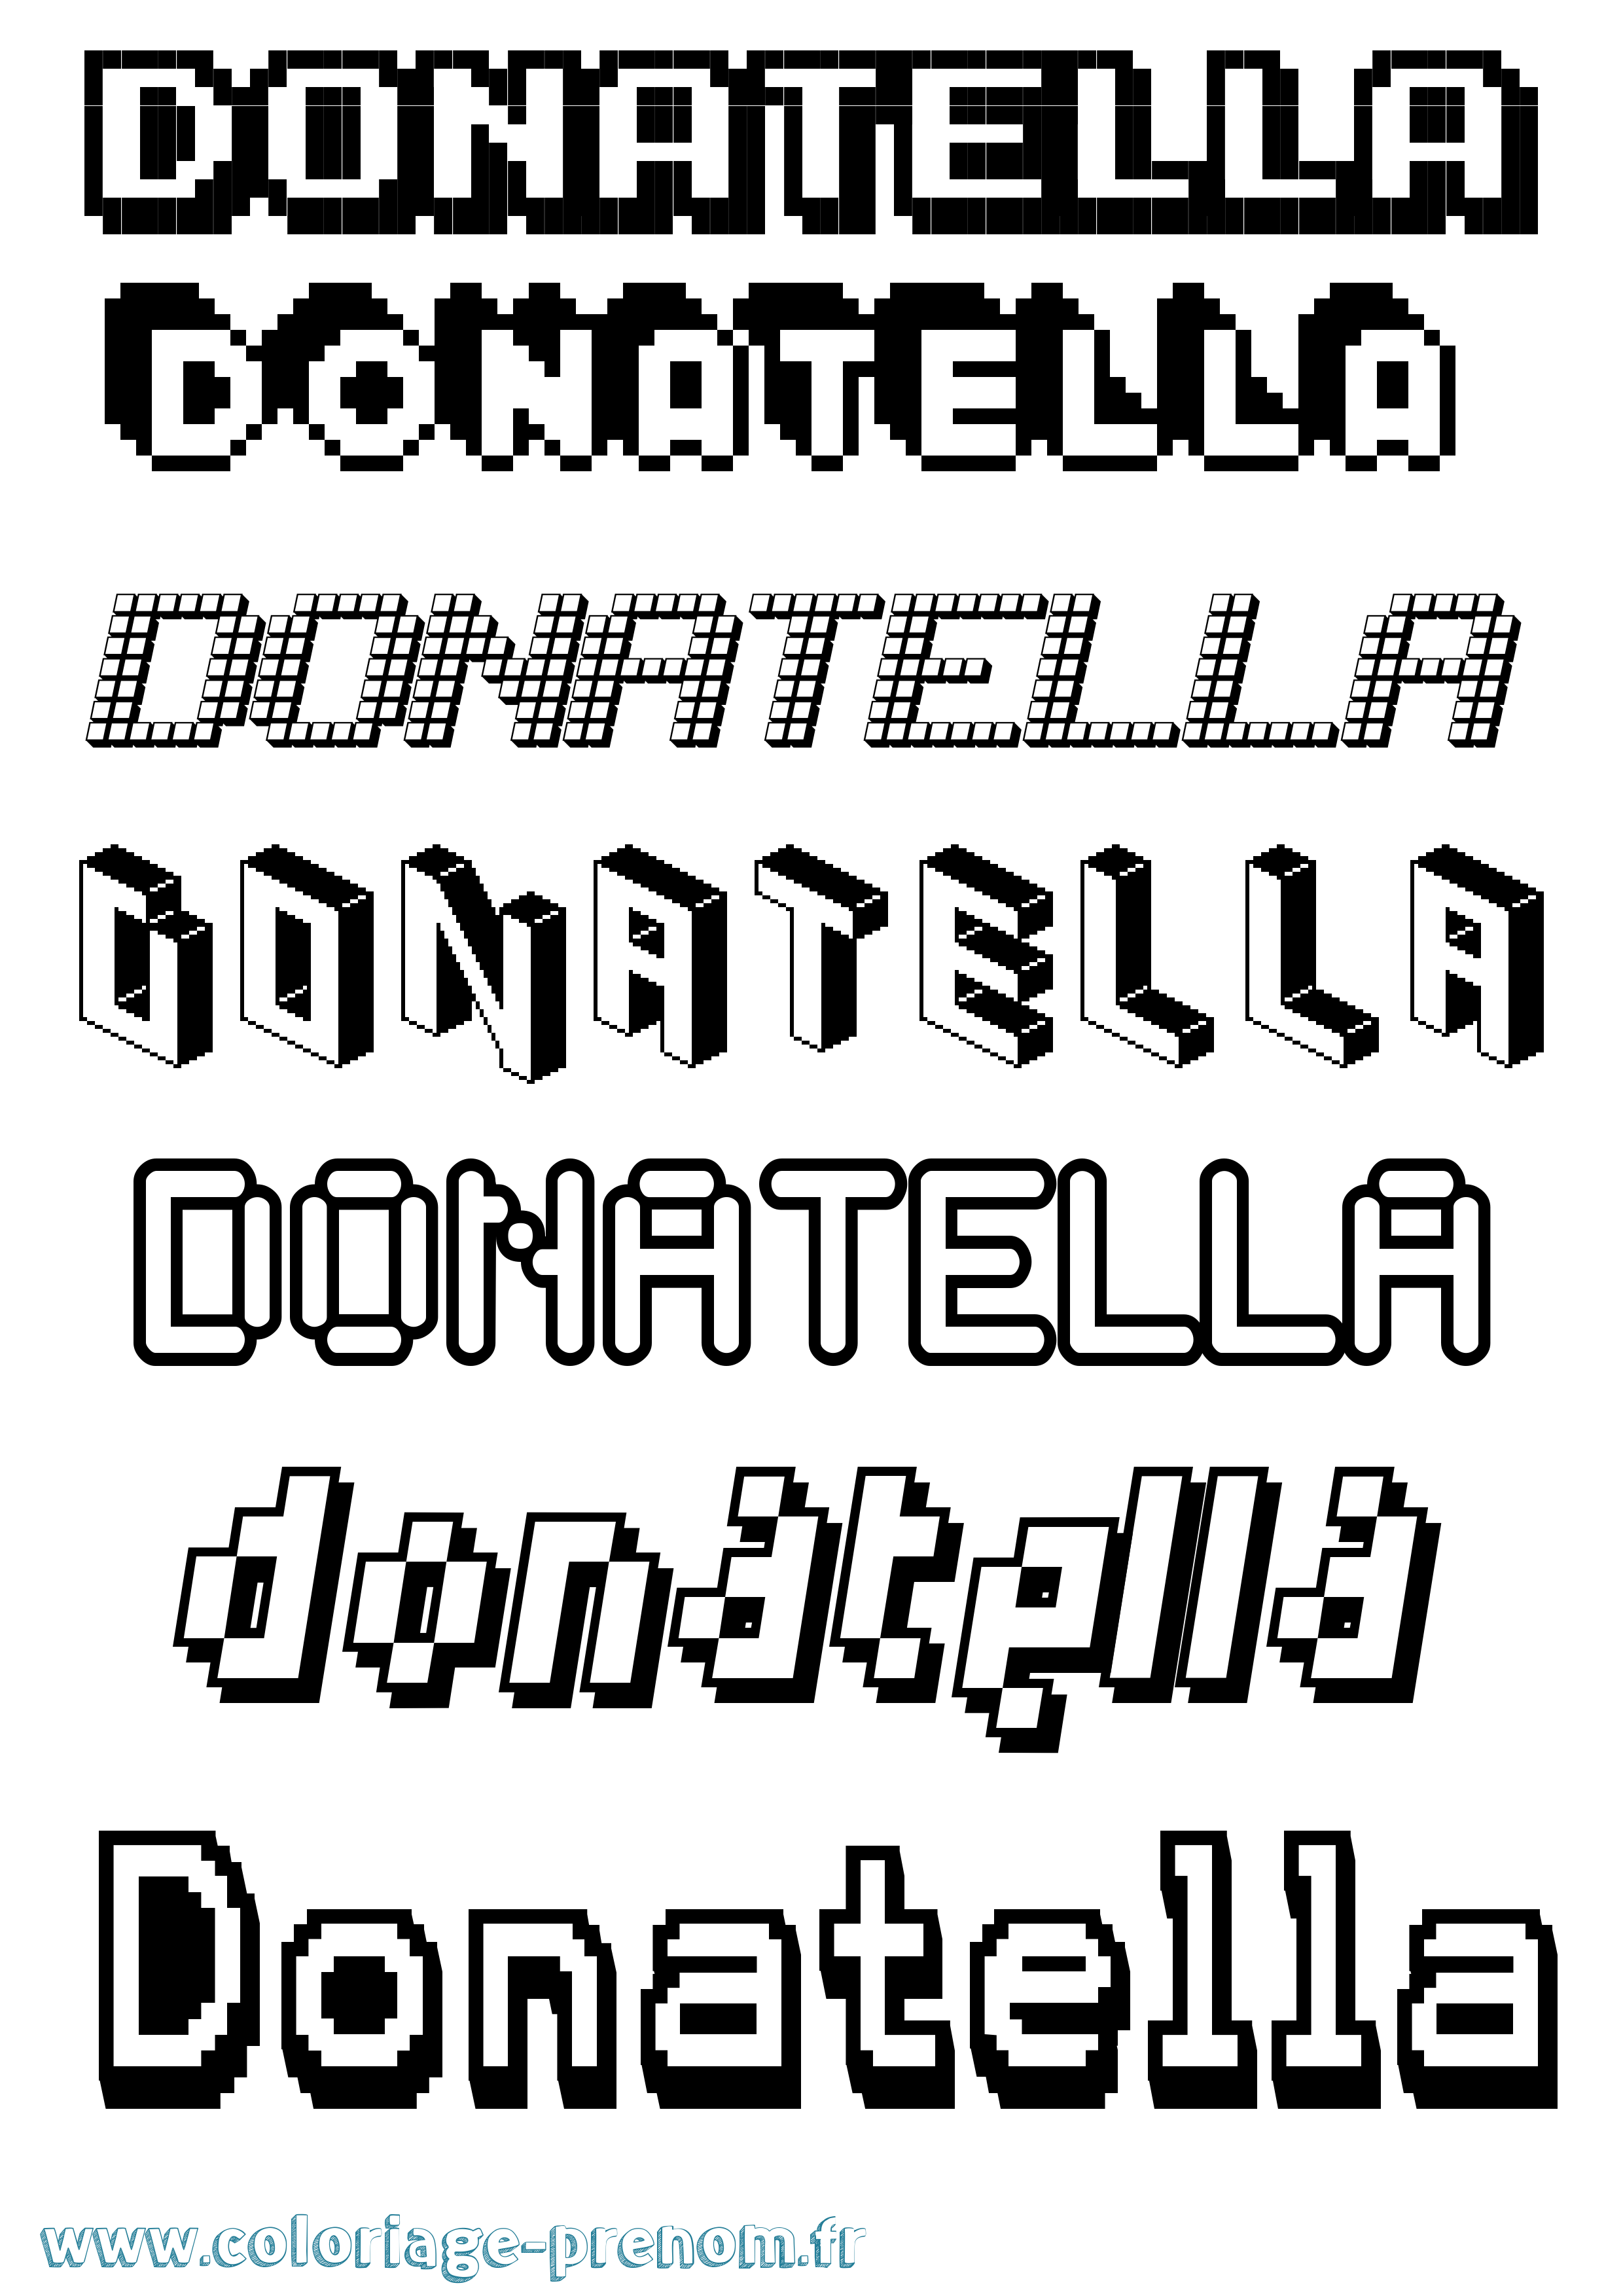 Coloriage prénom Donatella Pixel